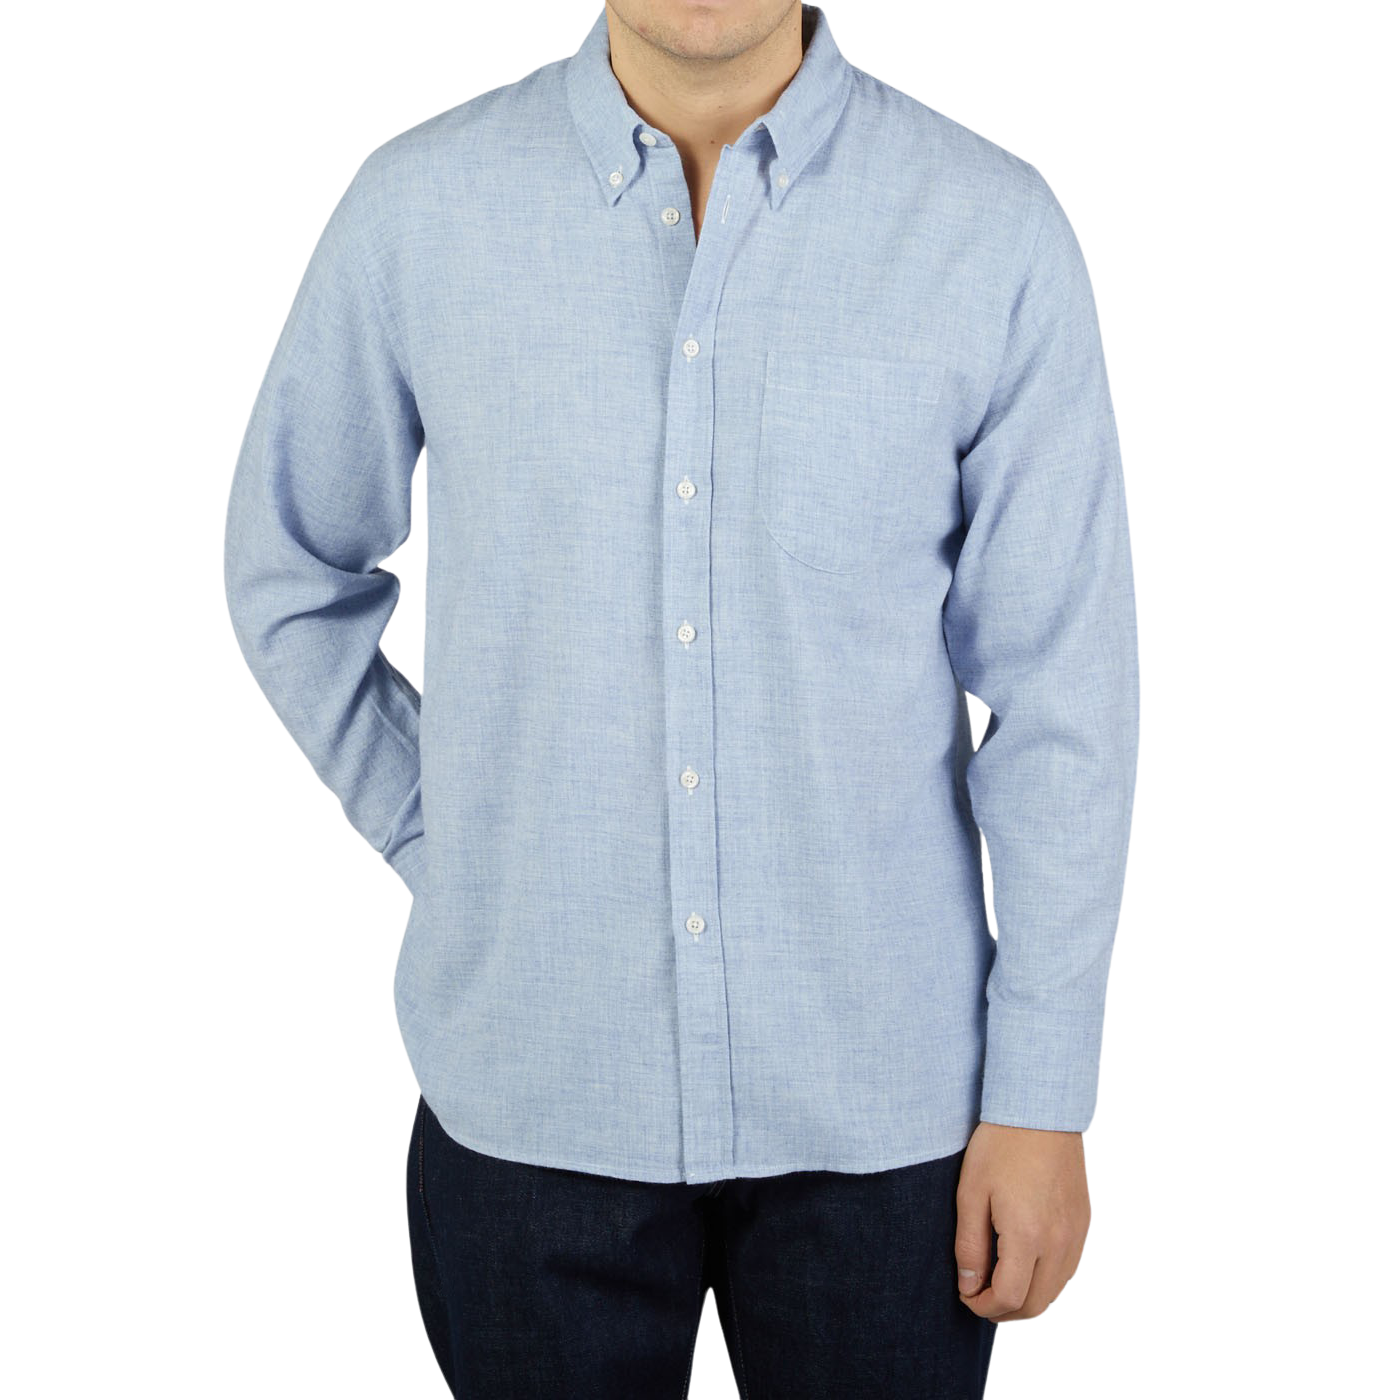 Universal Works | Light Blue Brushed Cotton Wool Shirt